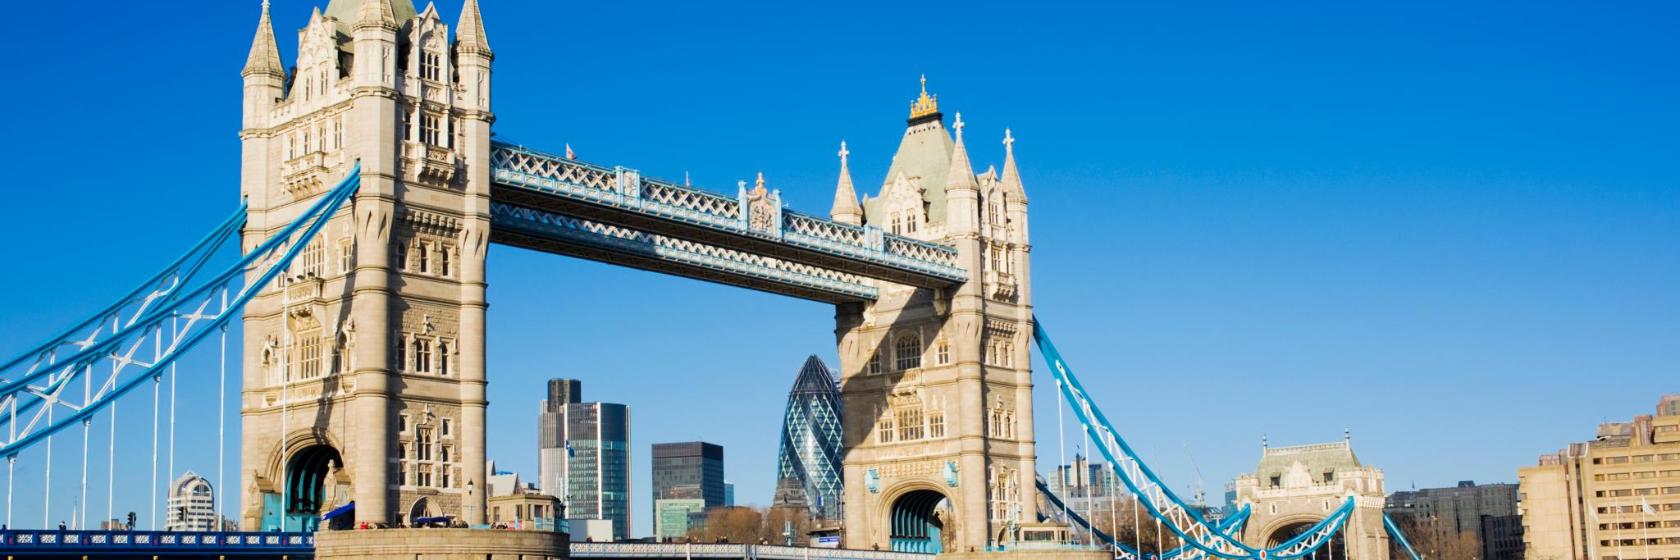 The best hotels in Tower Bridge, London, United Kingdom